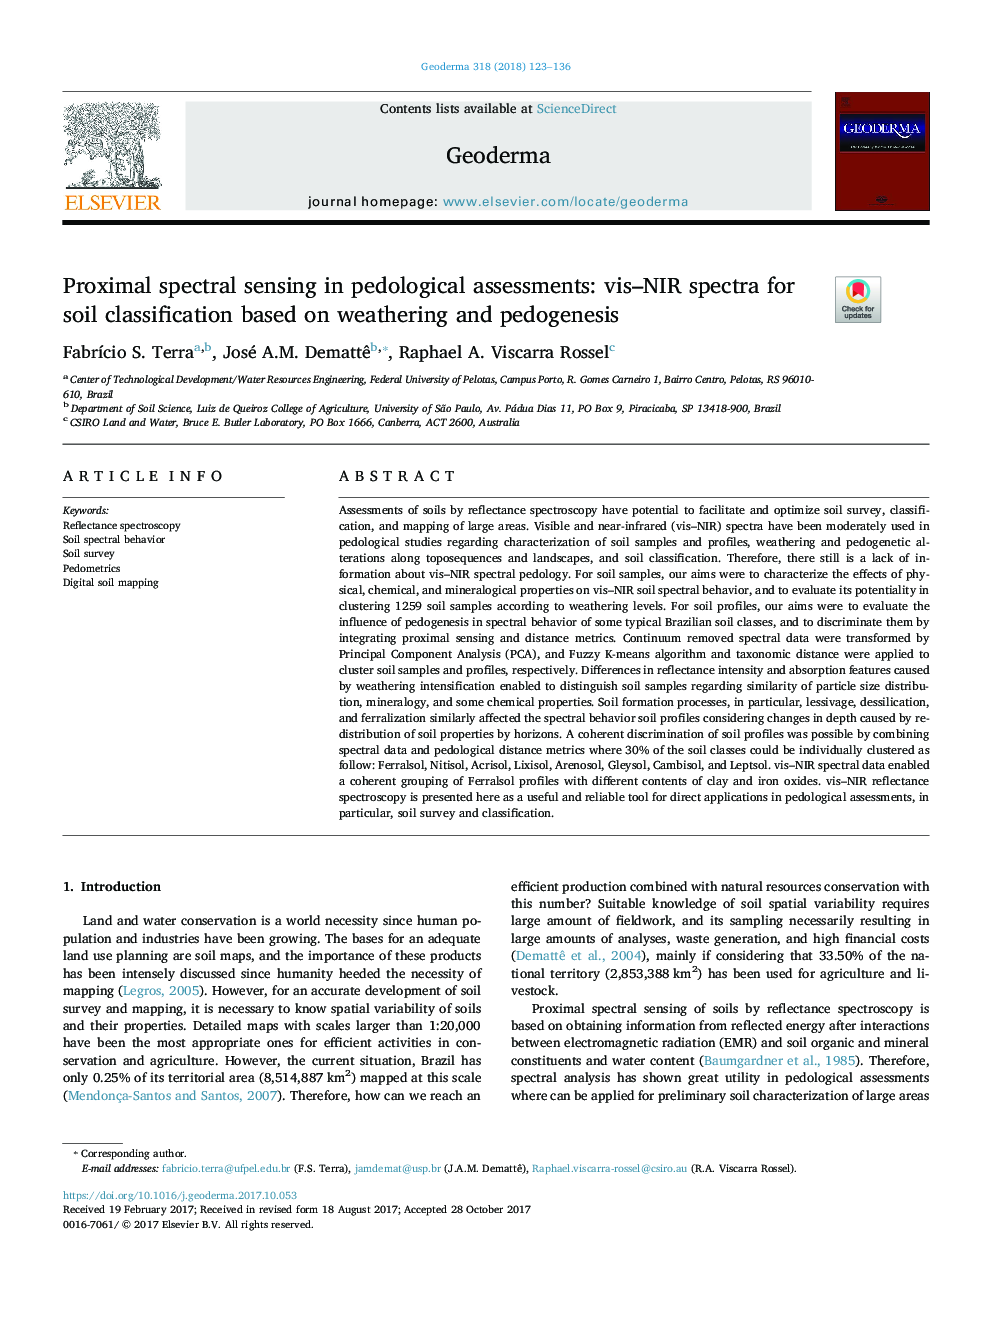 Proximal spectral sensing in pedological assessments: vis-NIR spectra for soil classification based on weathering and pedogenesis